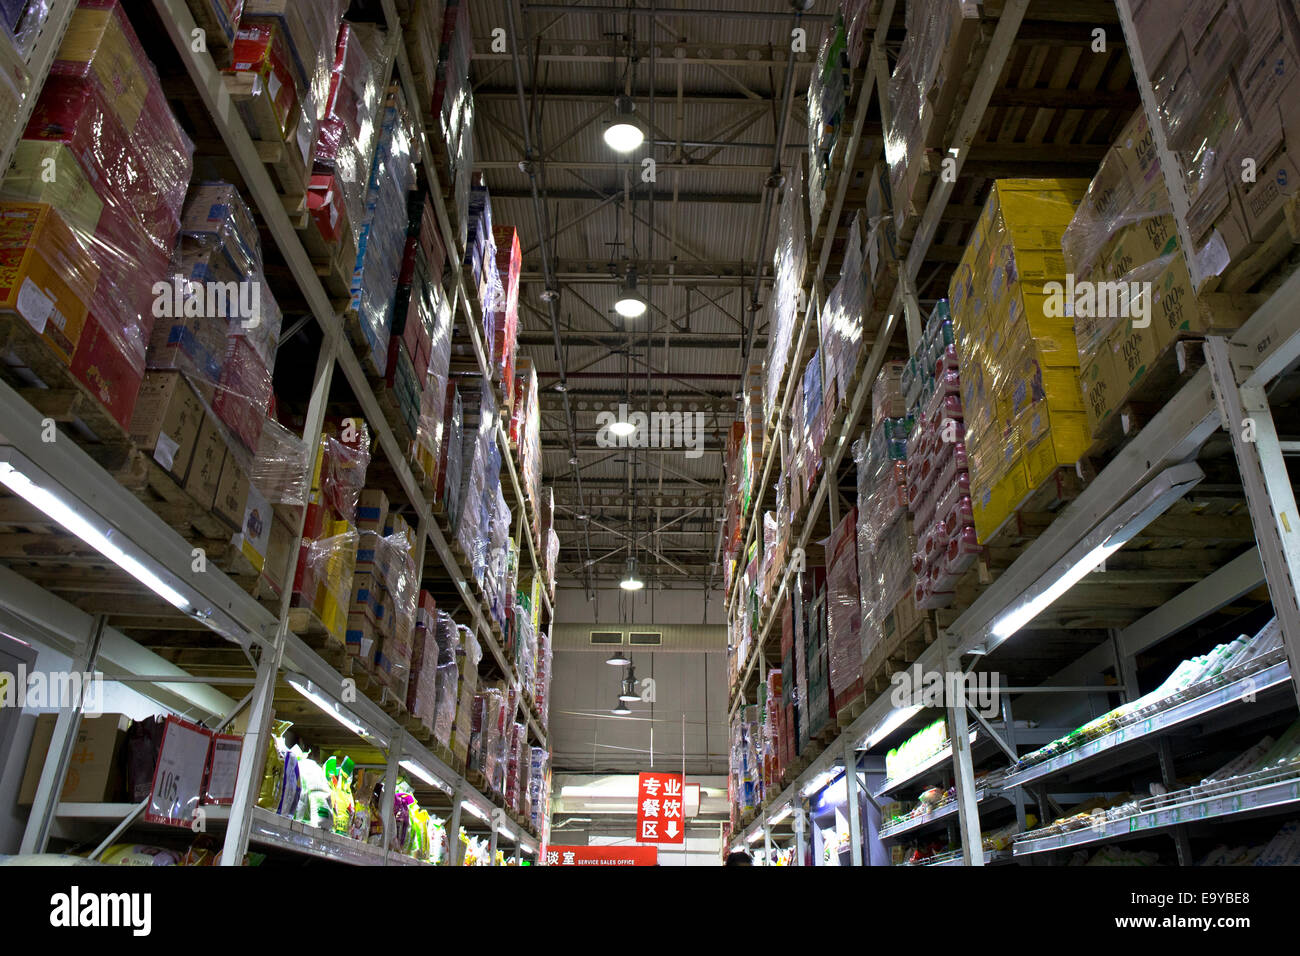 Supermarket shelves Stock Photo